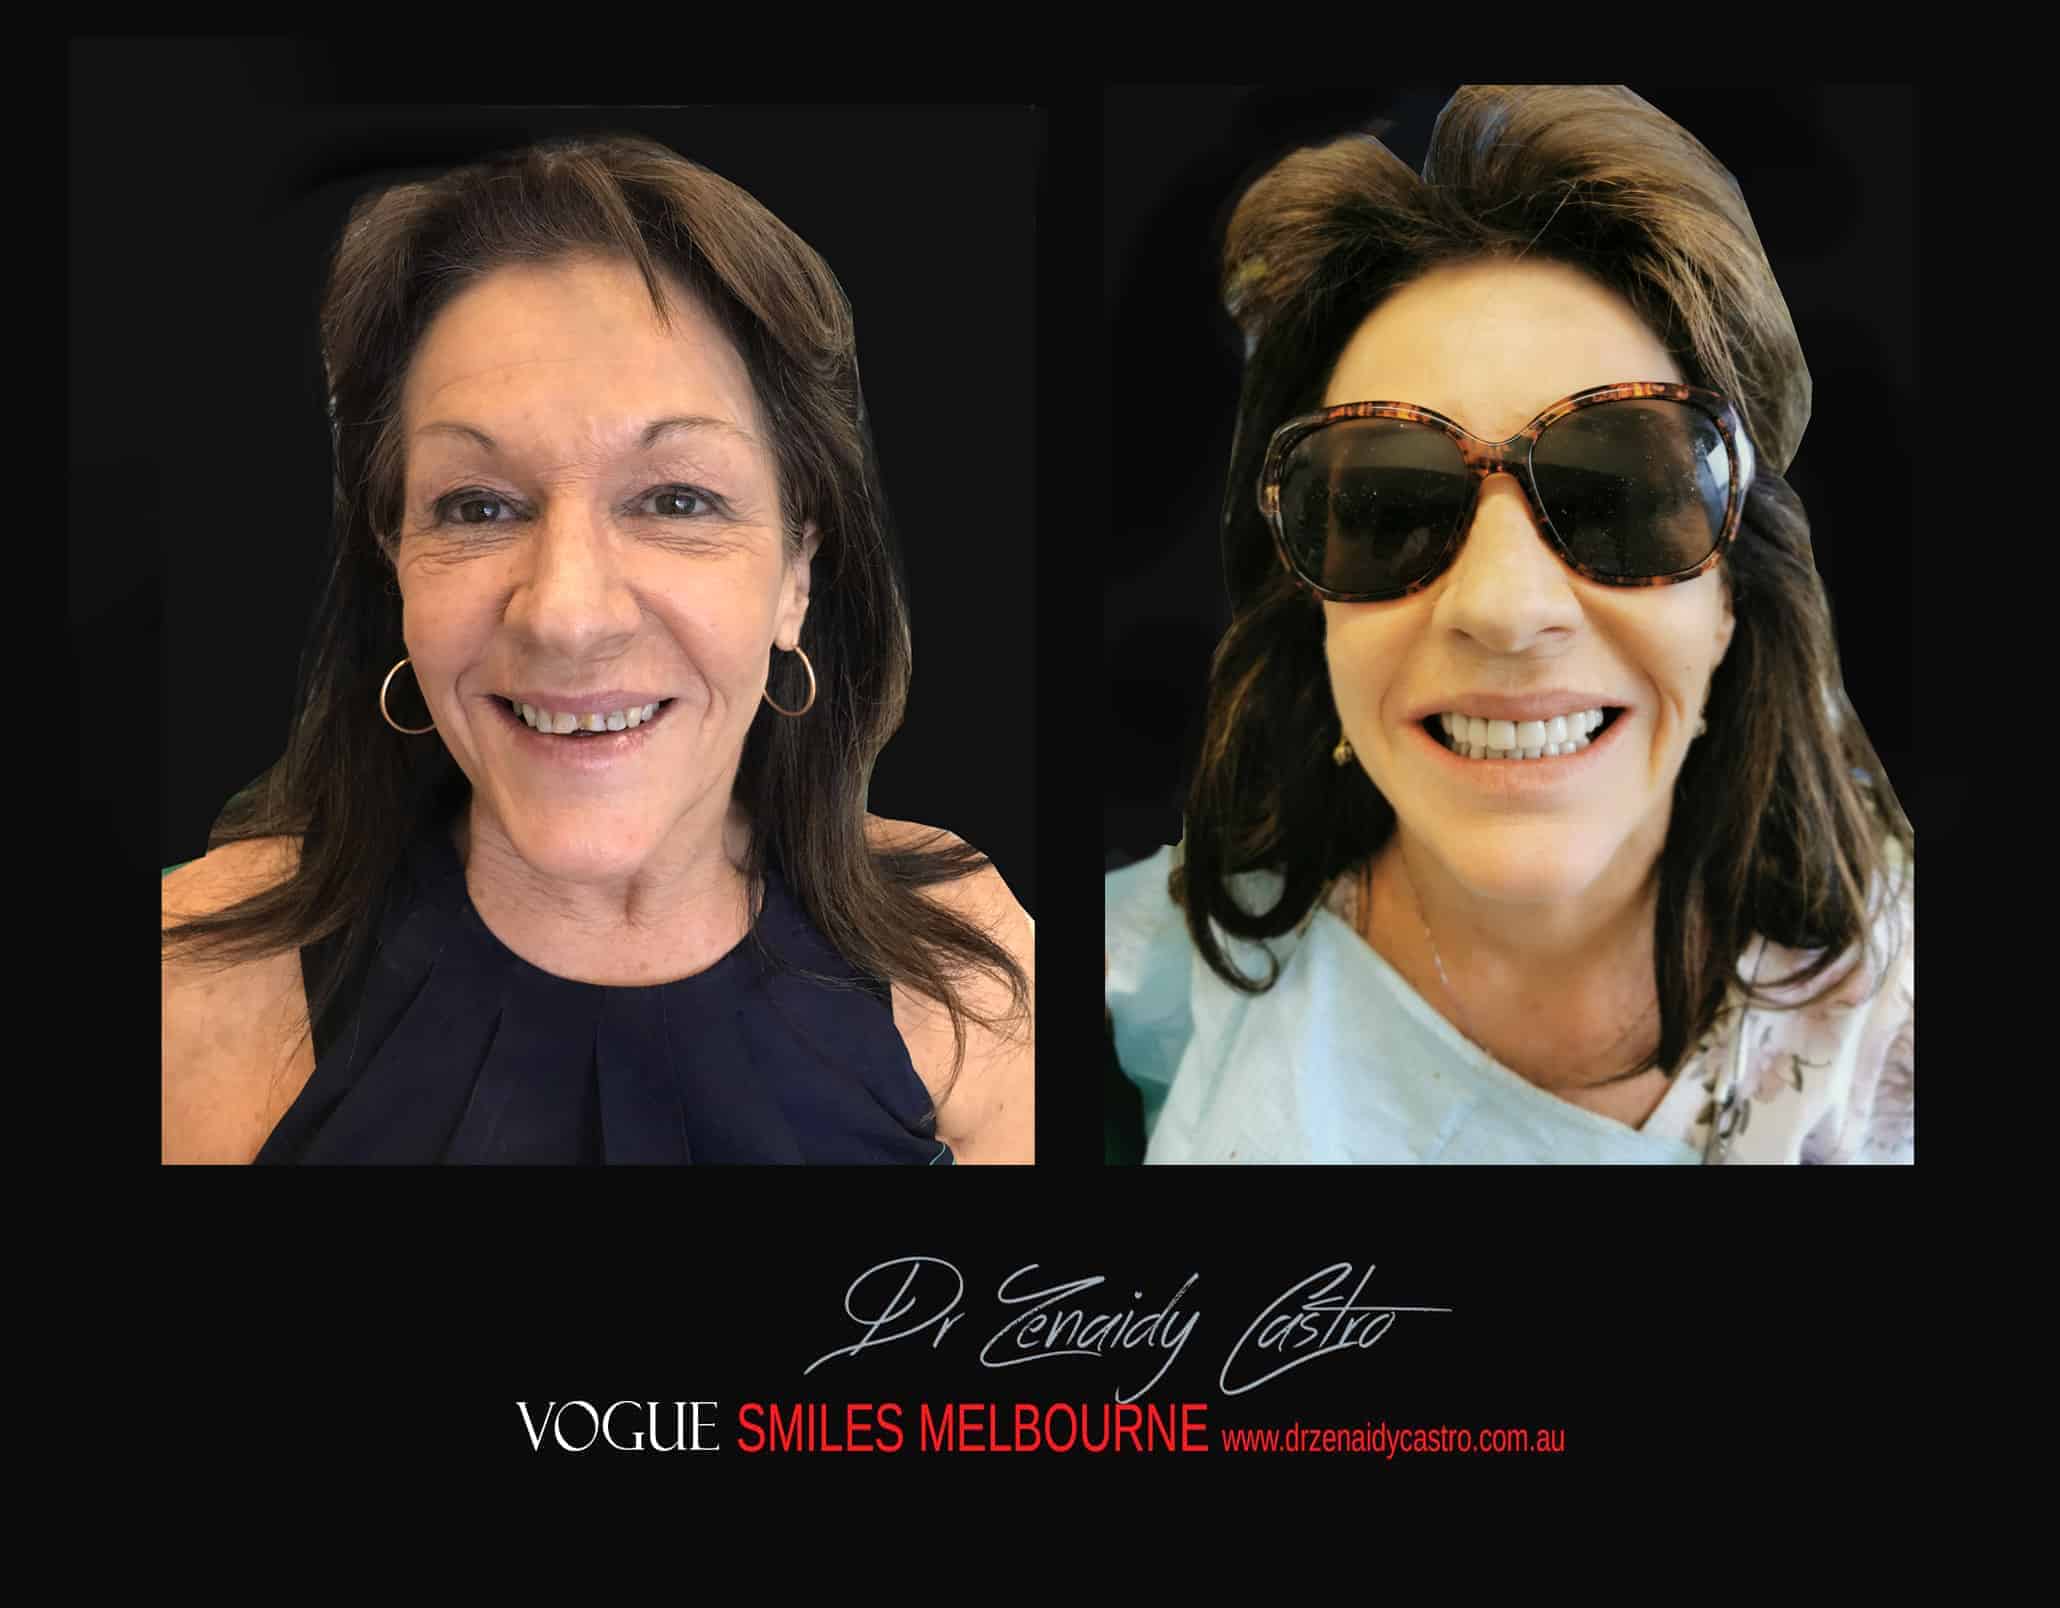 Non-surgical facelift procedure with Dental Veneers Melbourne CBD -Anti-aging expert Melbourne CBD, Non-Surgical & Minimally Invasive Facial and Smile Rejuvenation Melbourne